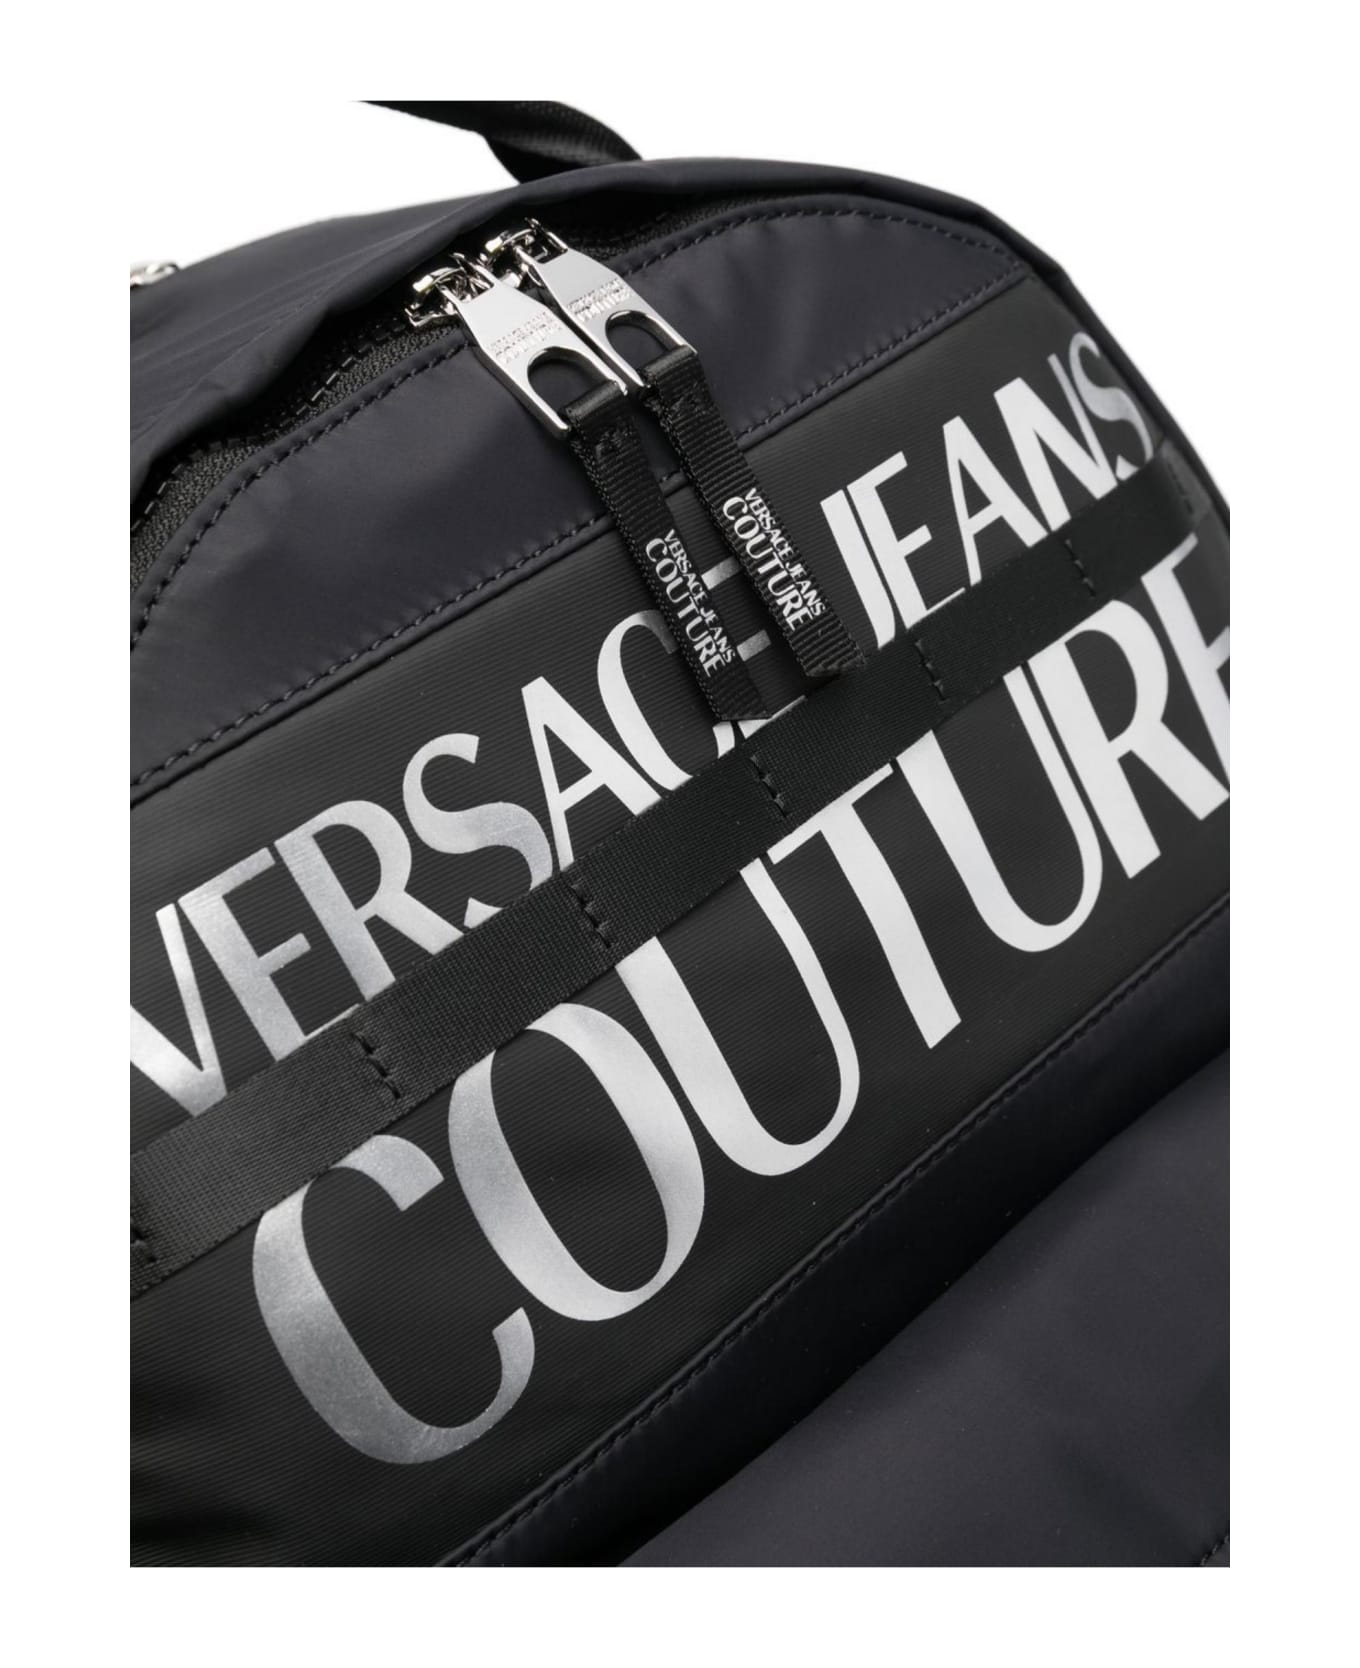 Versace Jeans Couture Bags Black - Black